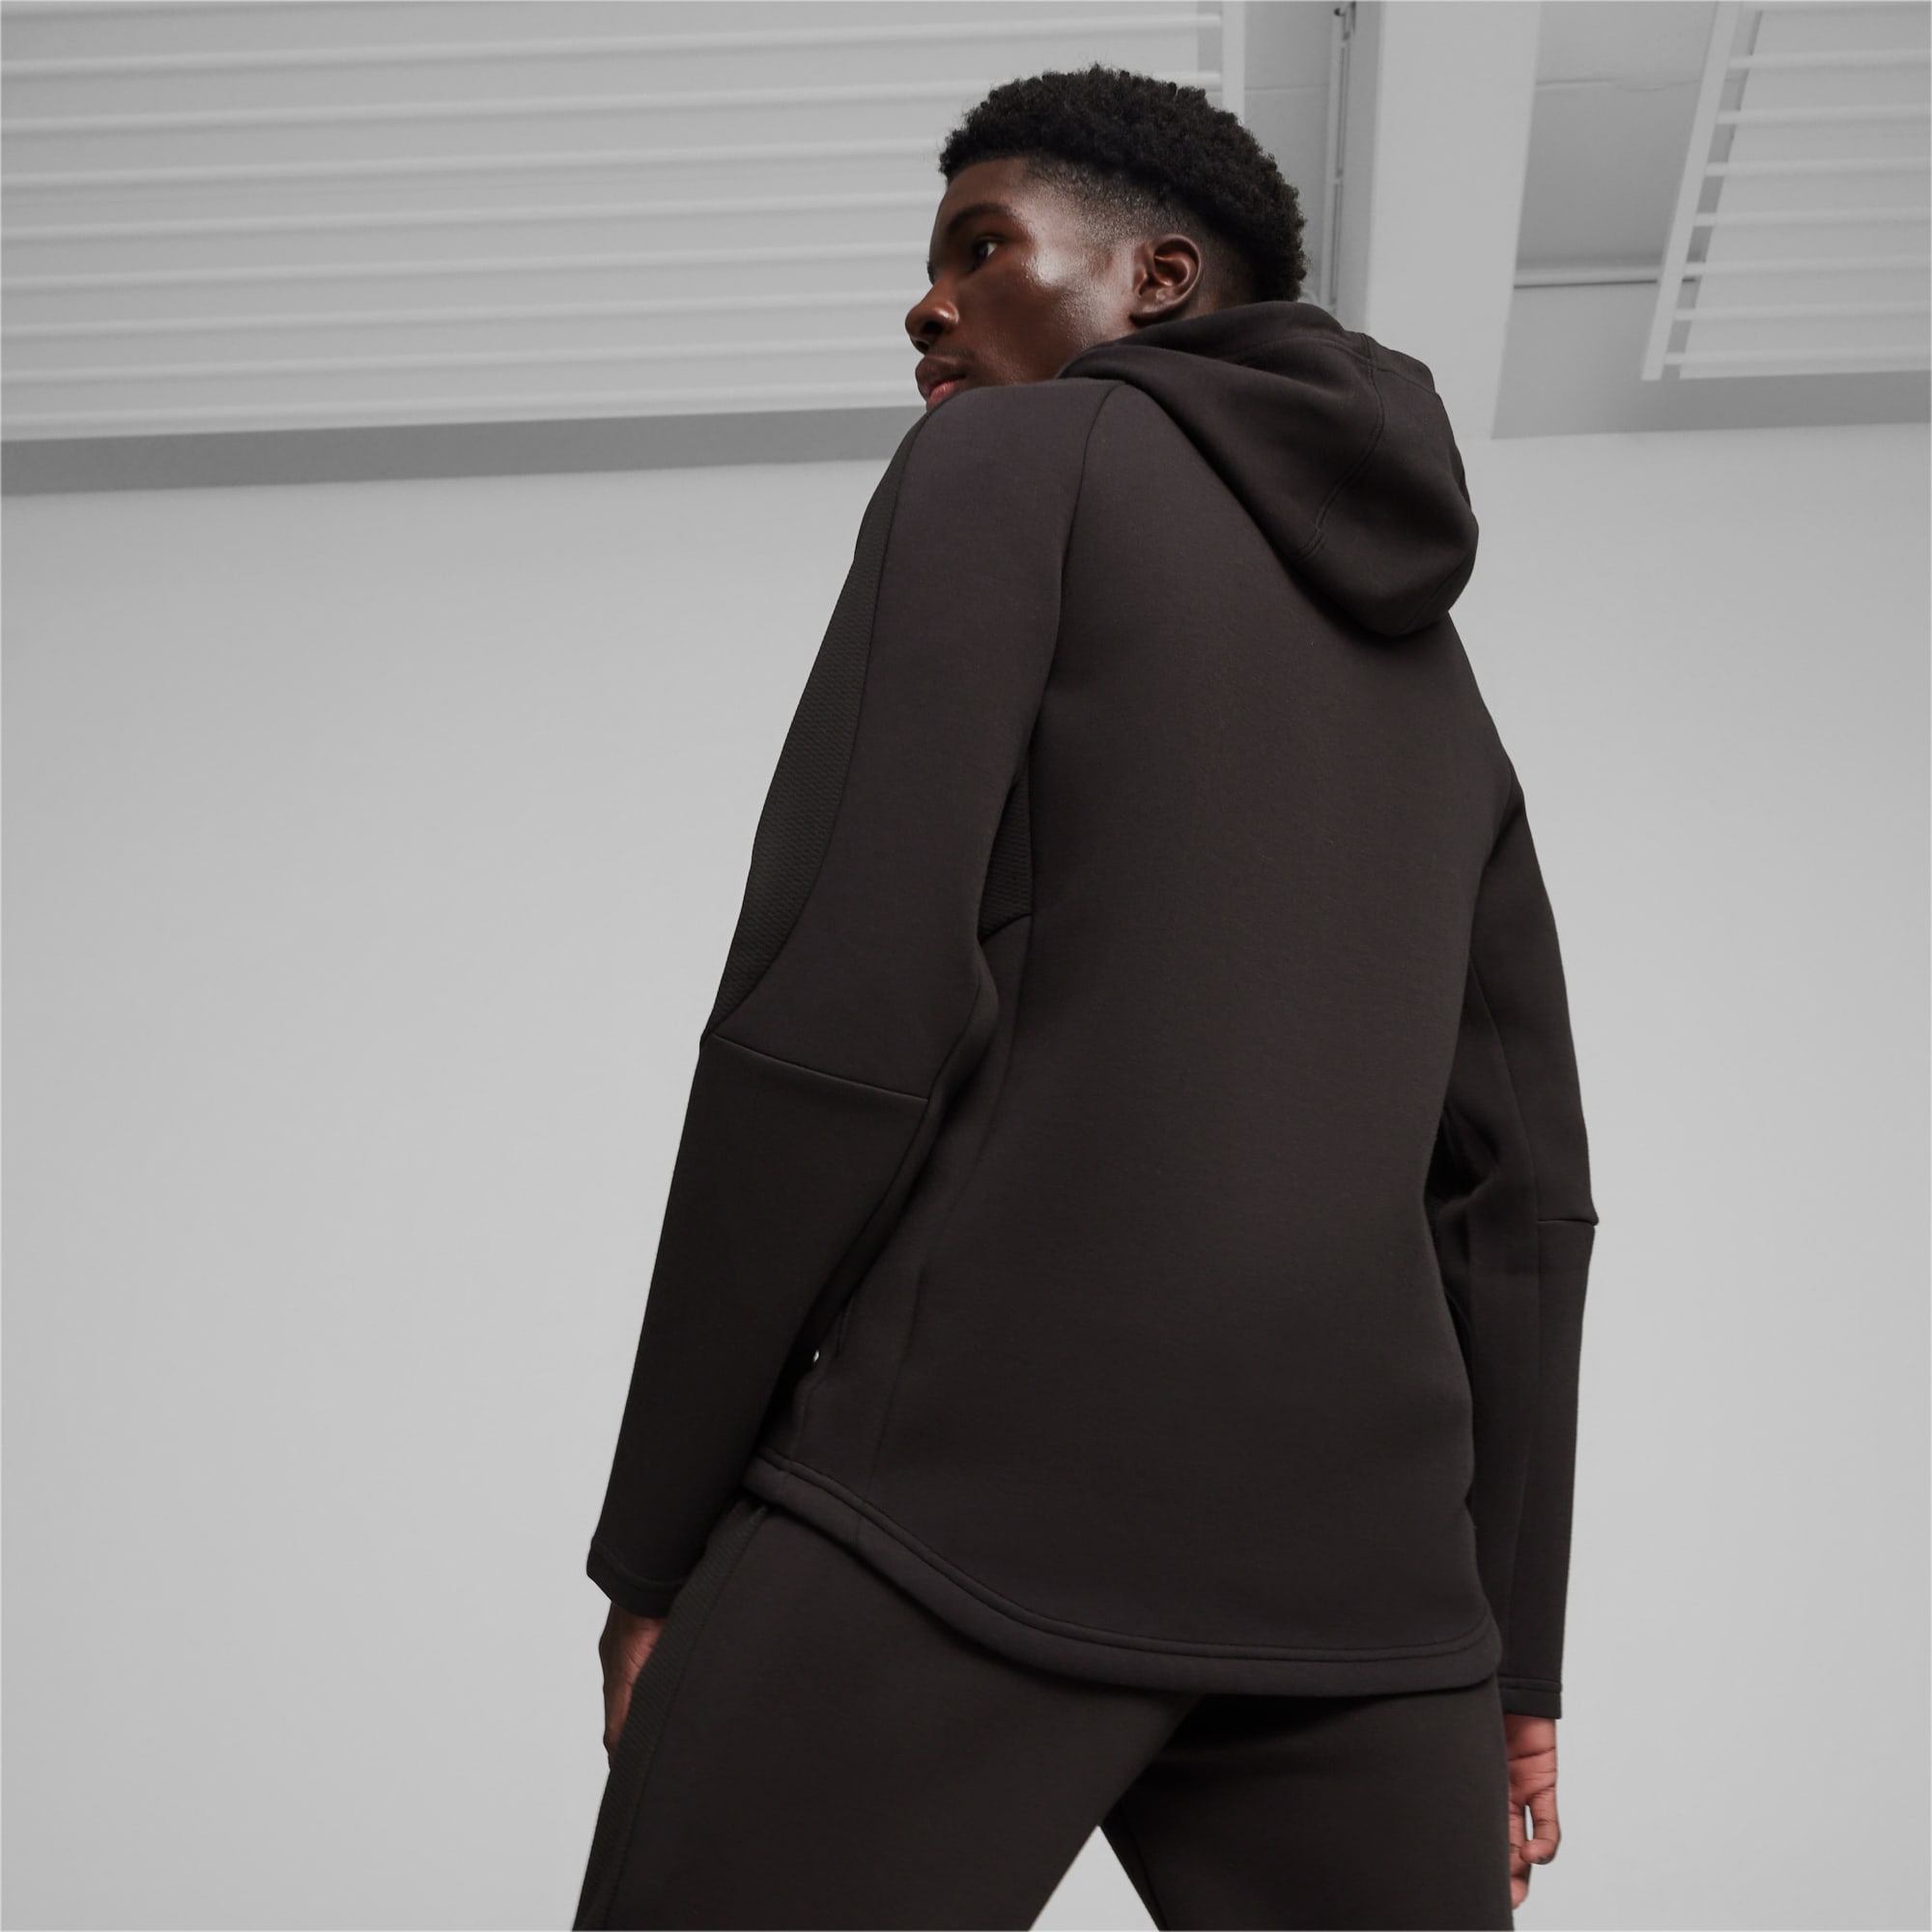 PUMA Evostripe Men's Full-Zip Hoodie, Black, Size XS, Clothing